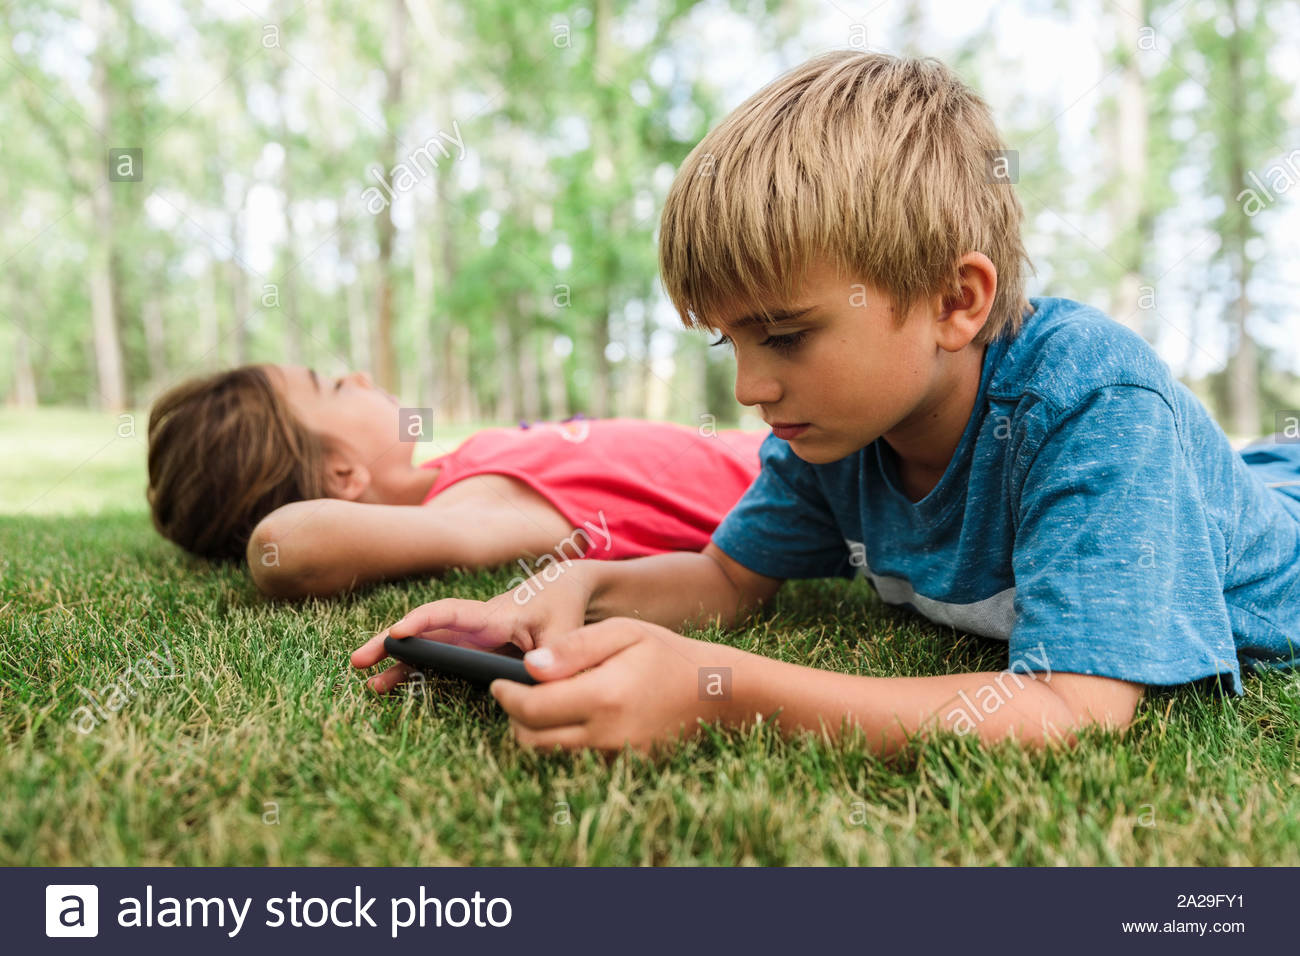 Boy lying on grass using smartphone Stock Photo